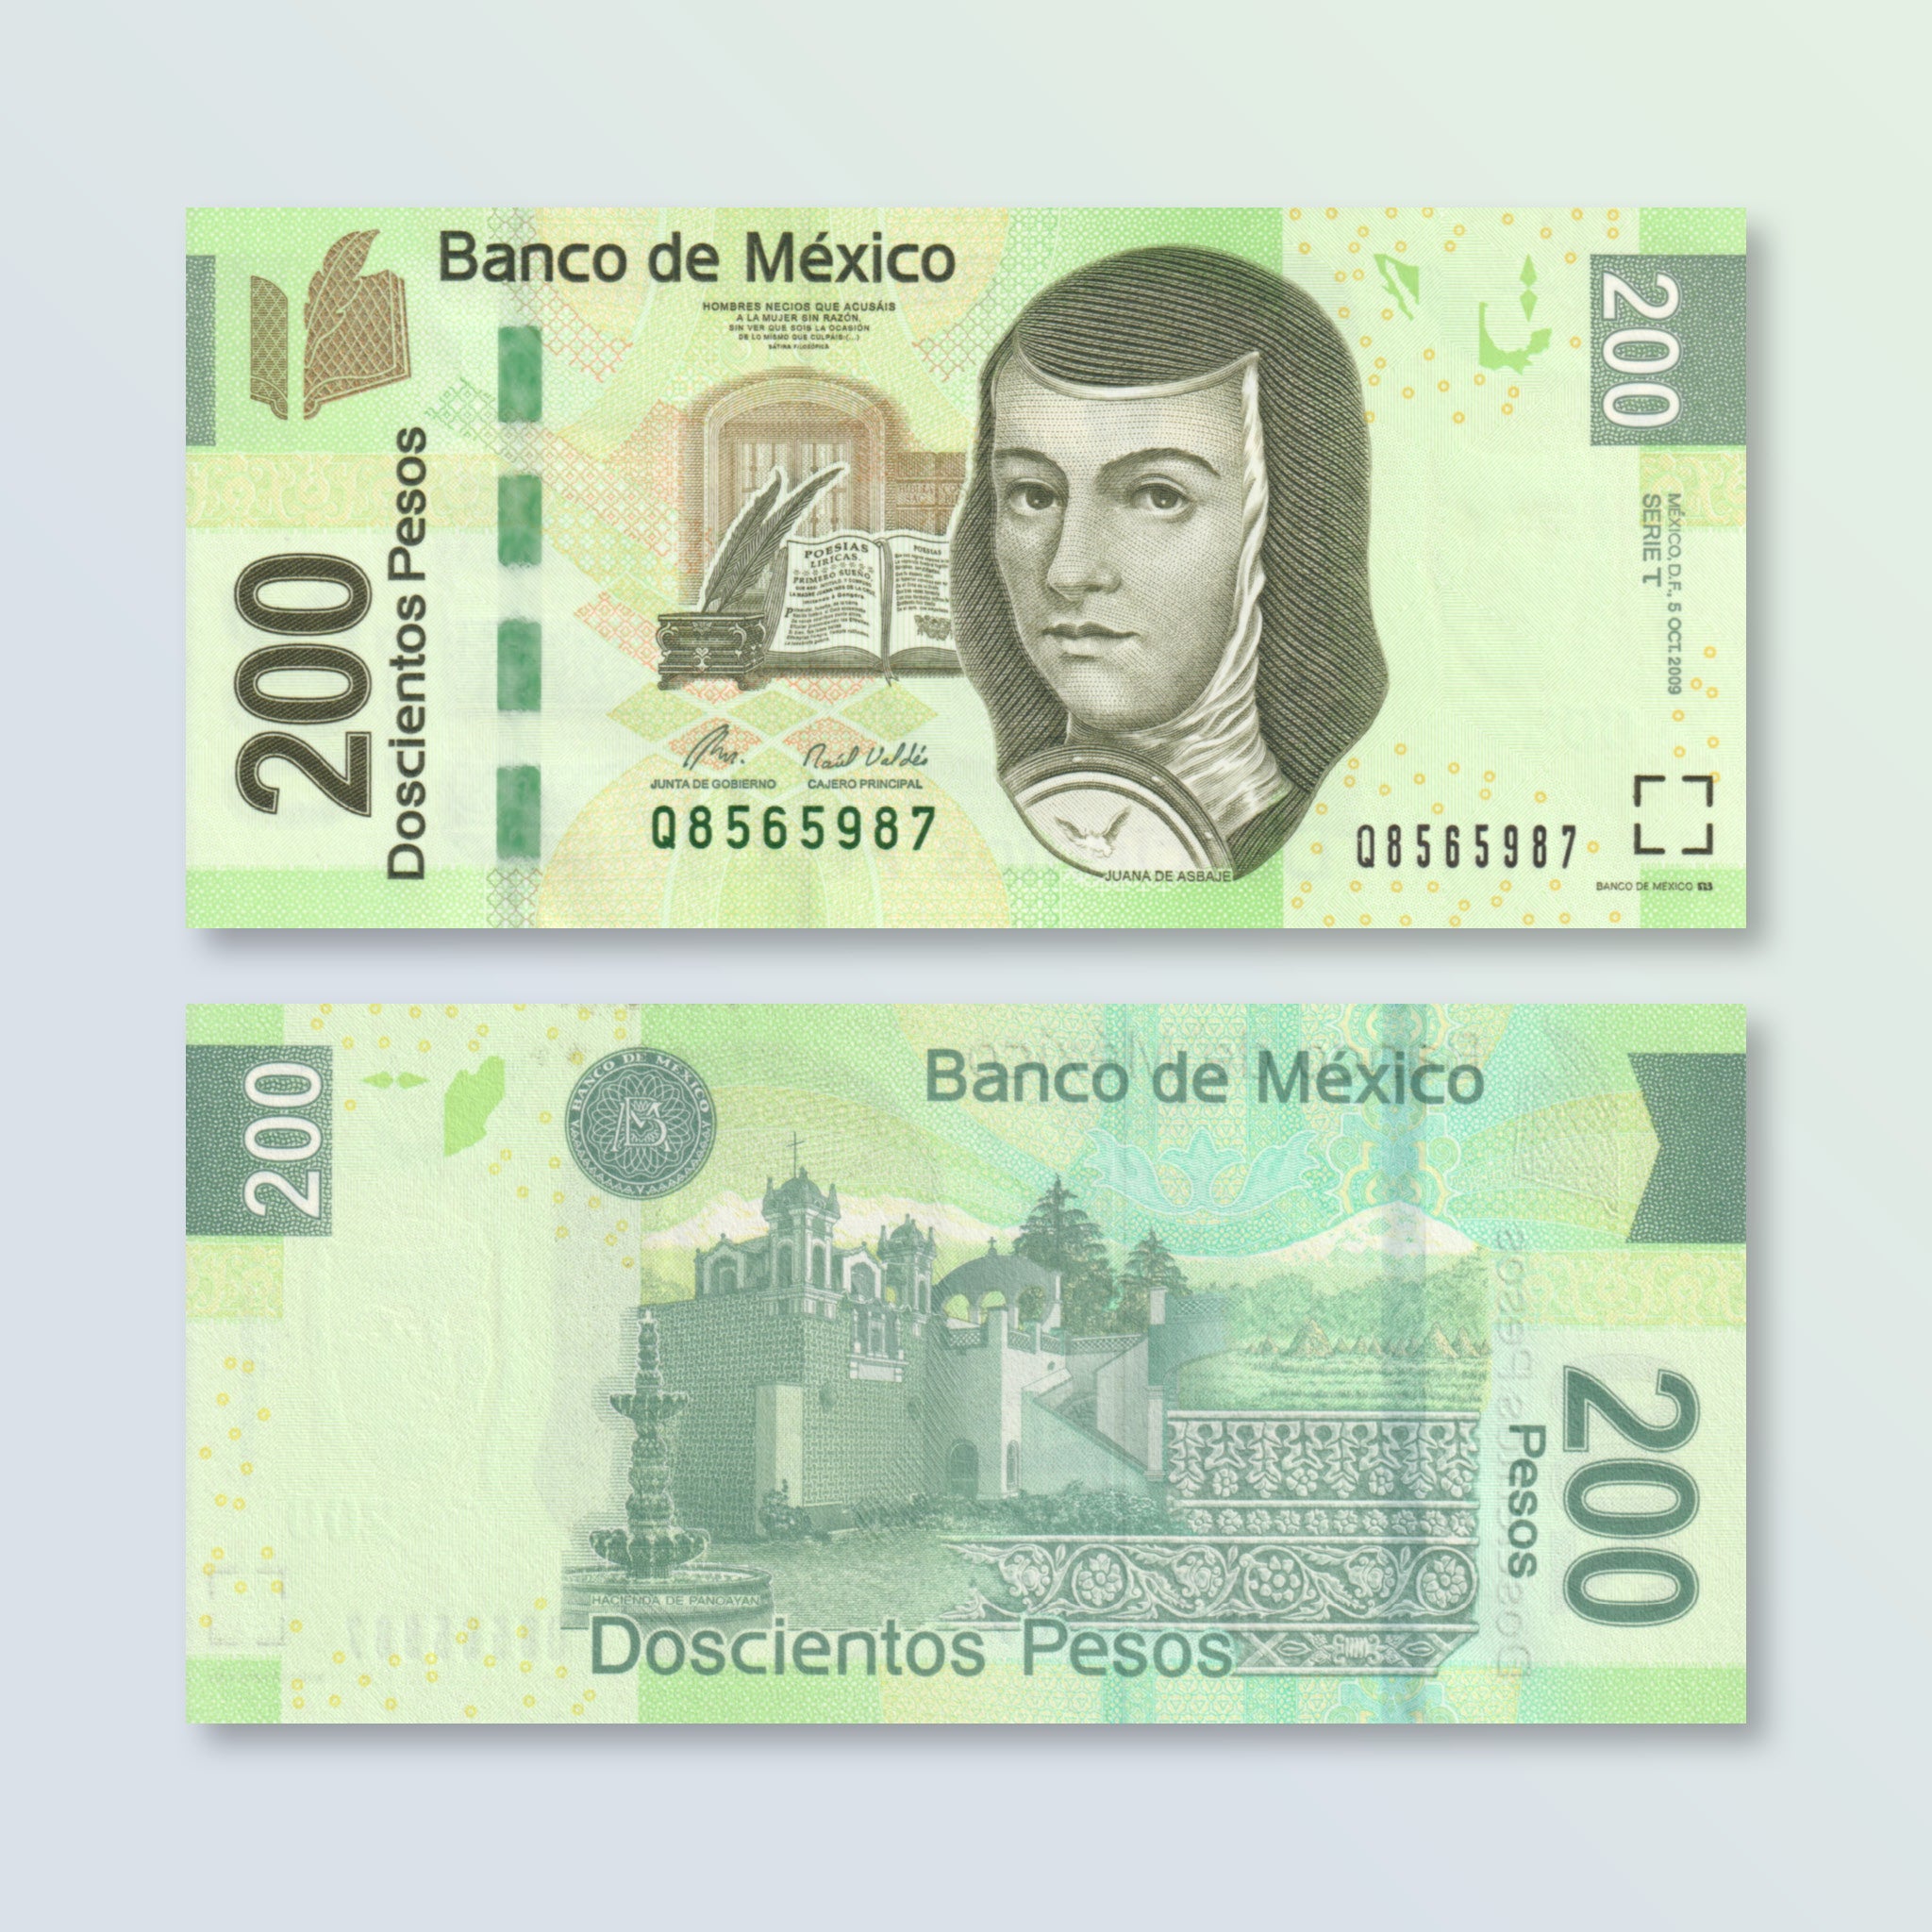 Mexico 200 Pesos, 2009, B707f, P125t, UNC - Robert's World Money - World Banknotes